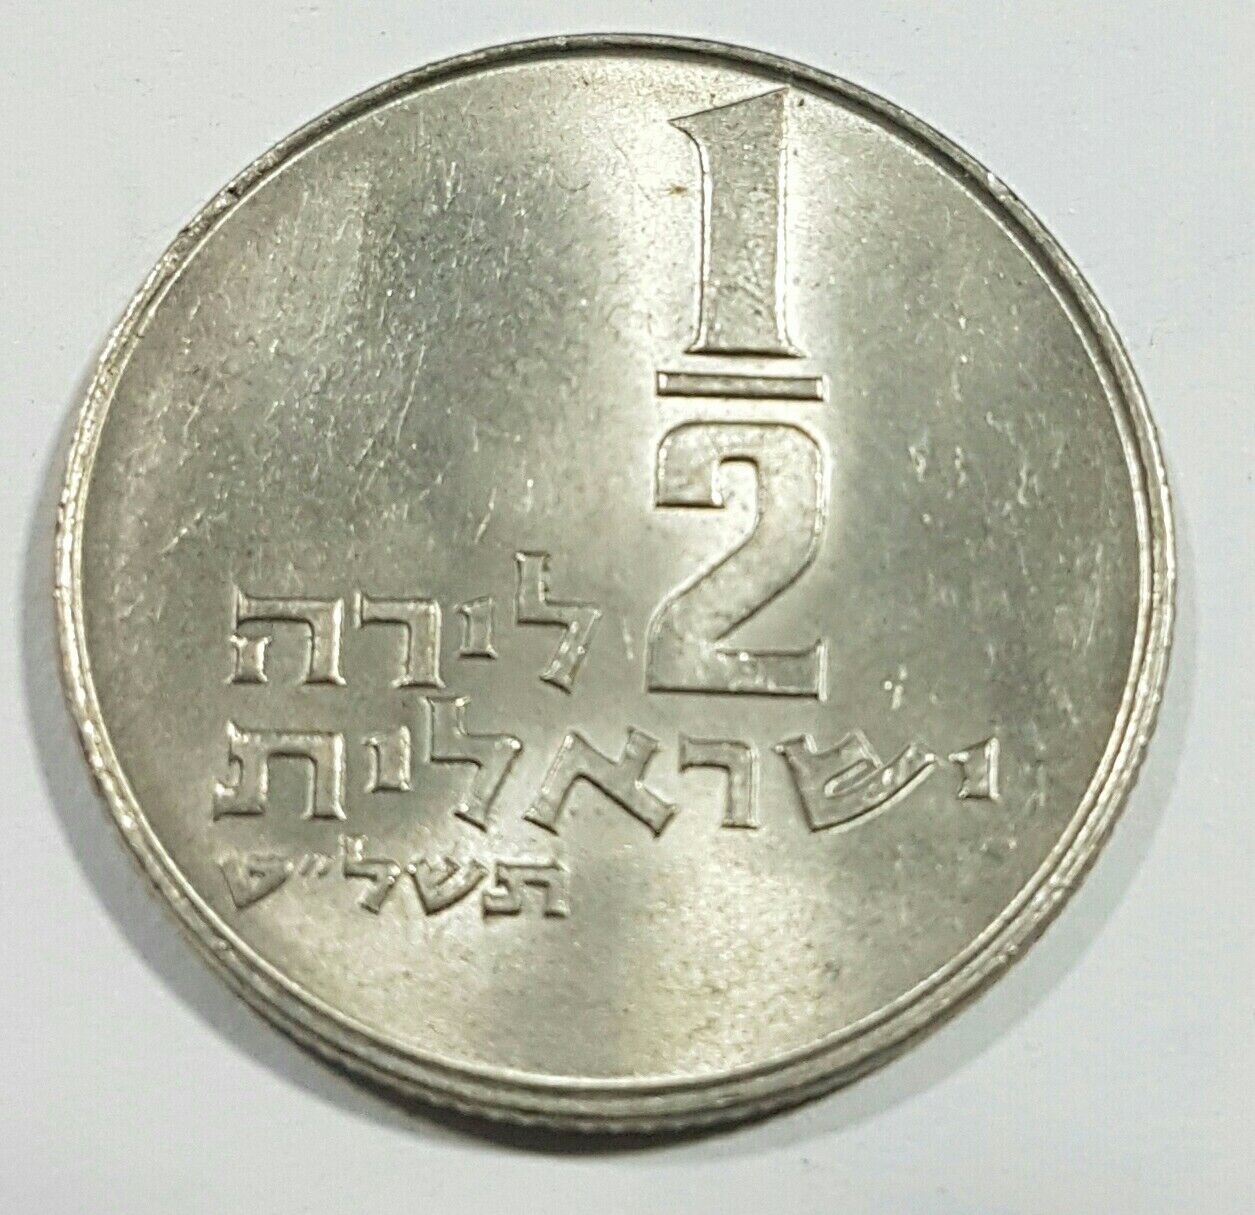 Israel Complete Set Coins Lot of 30 Coin Pruta Sheqalim Sheqel Agorot Since 1949 Без бренда - фотография #10